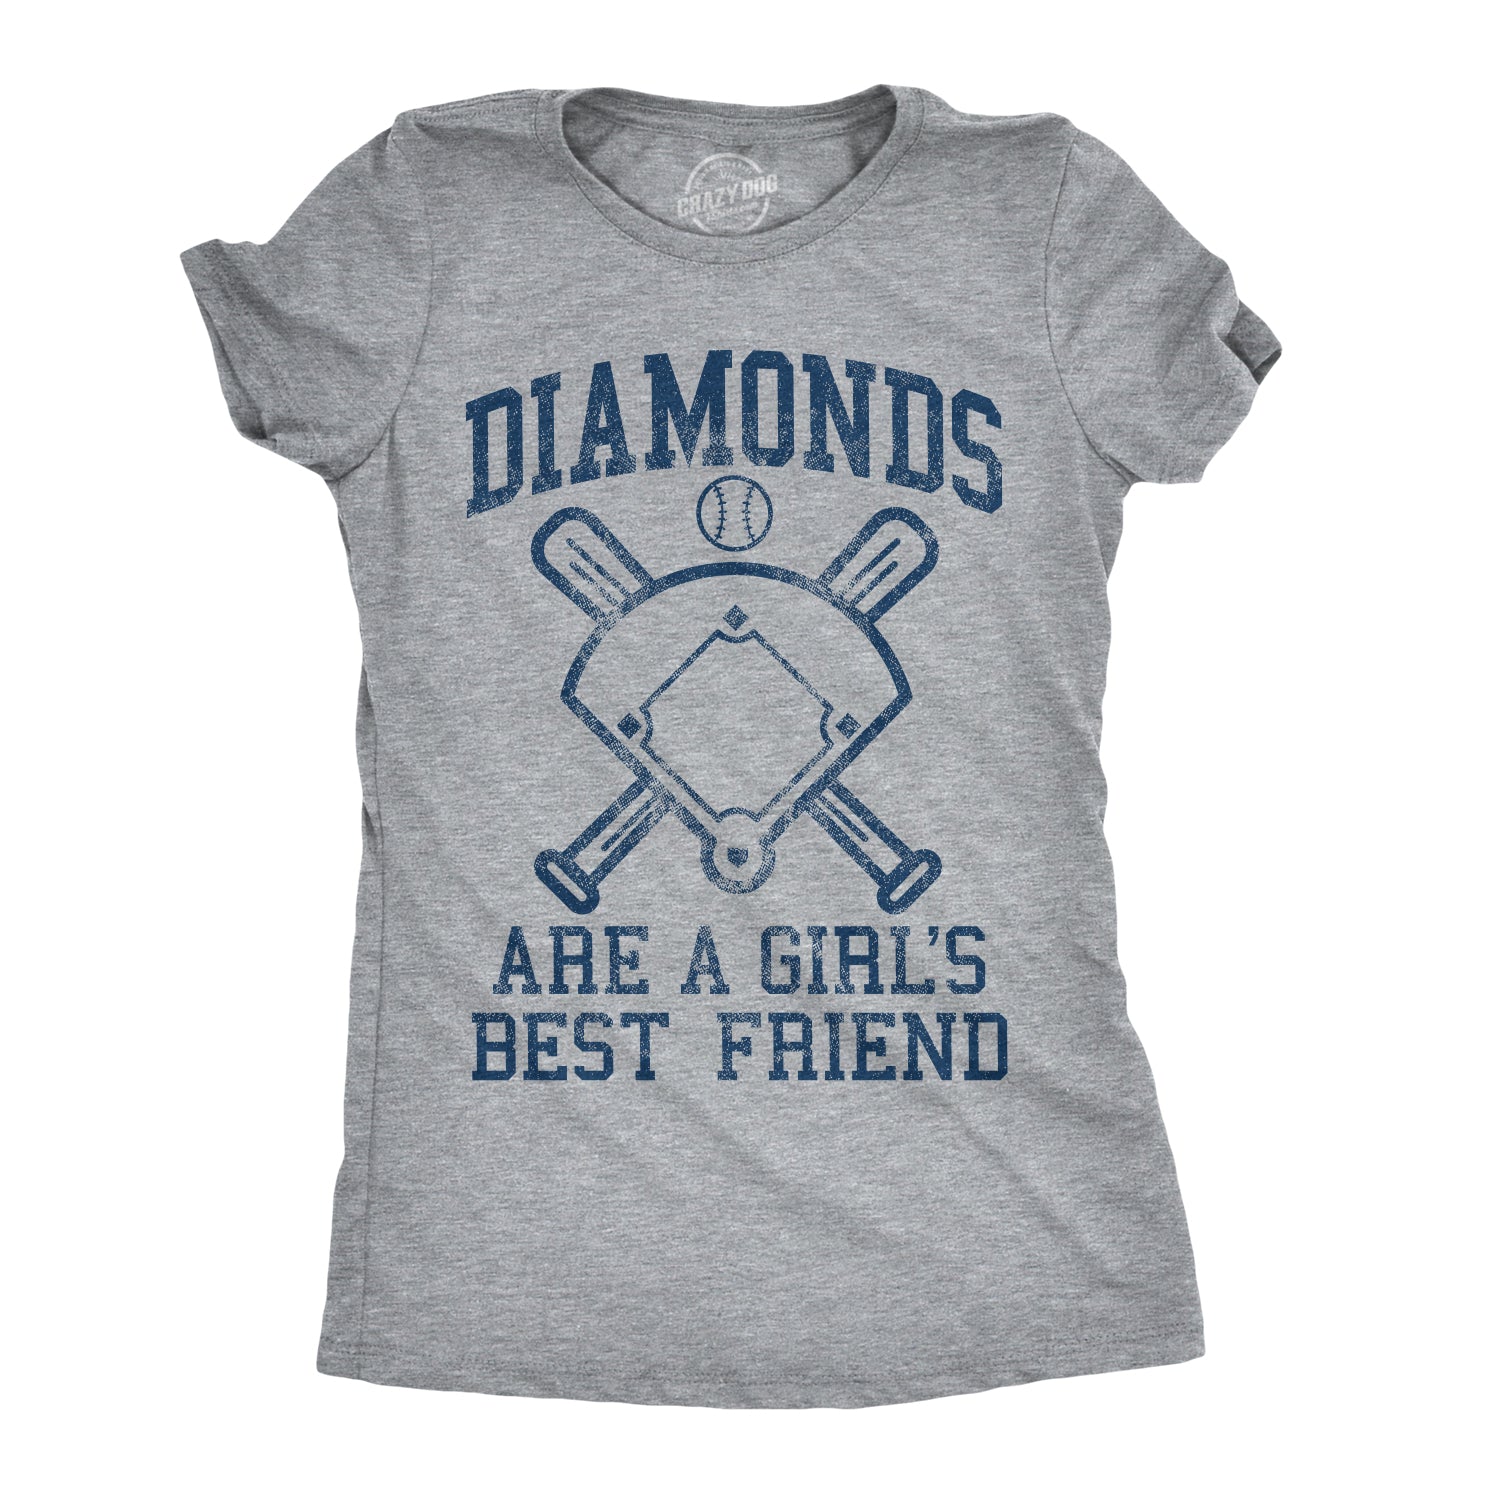 Funny Light Heather Grey Diamonds Are A Girls Best Friend Womens T Shirt Nerdy Baseball Tee